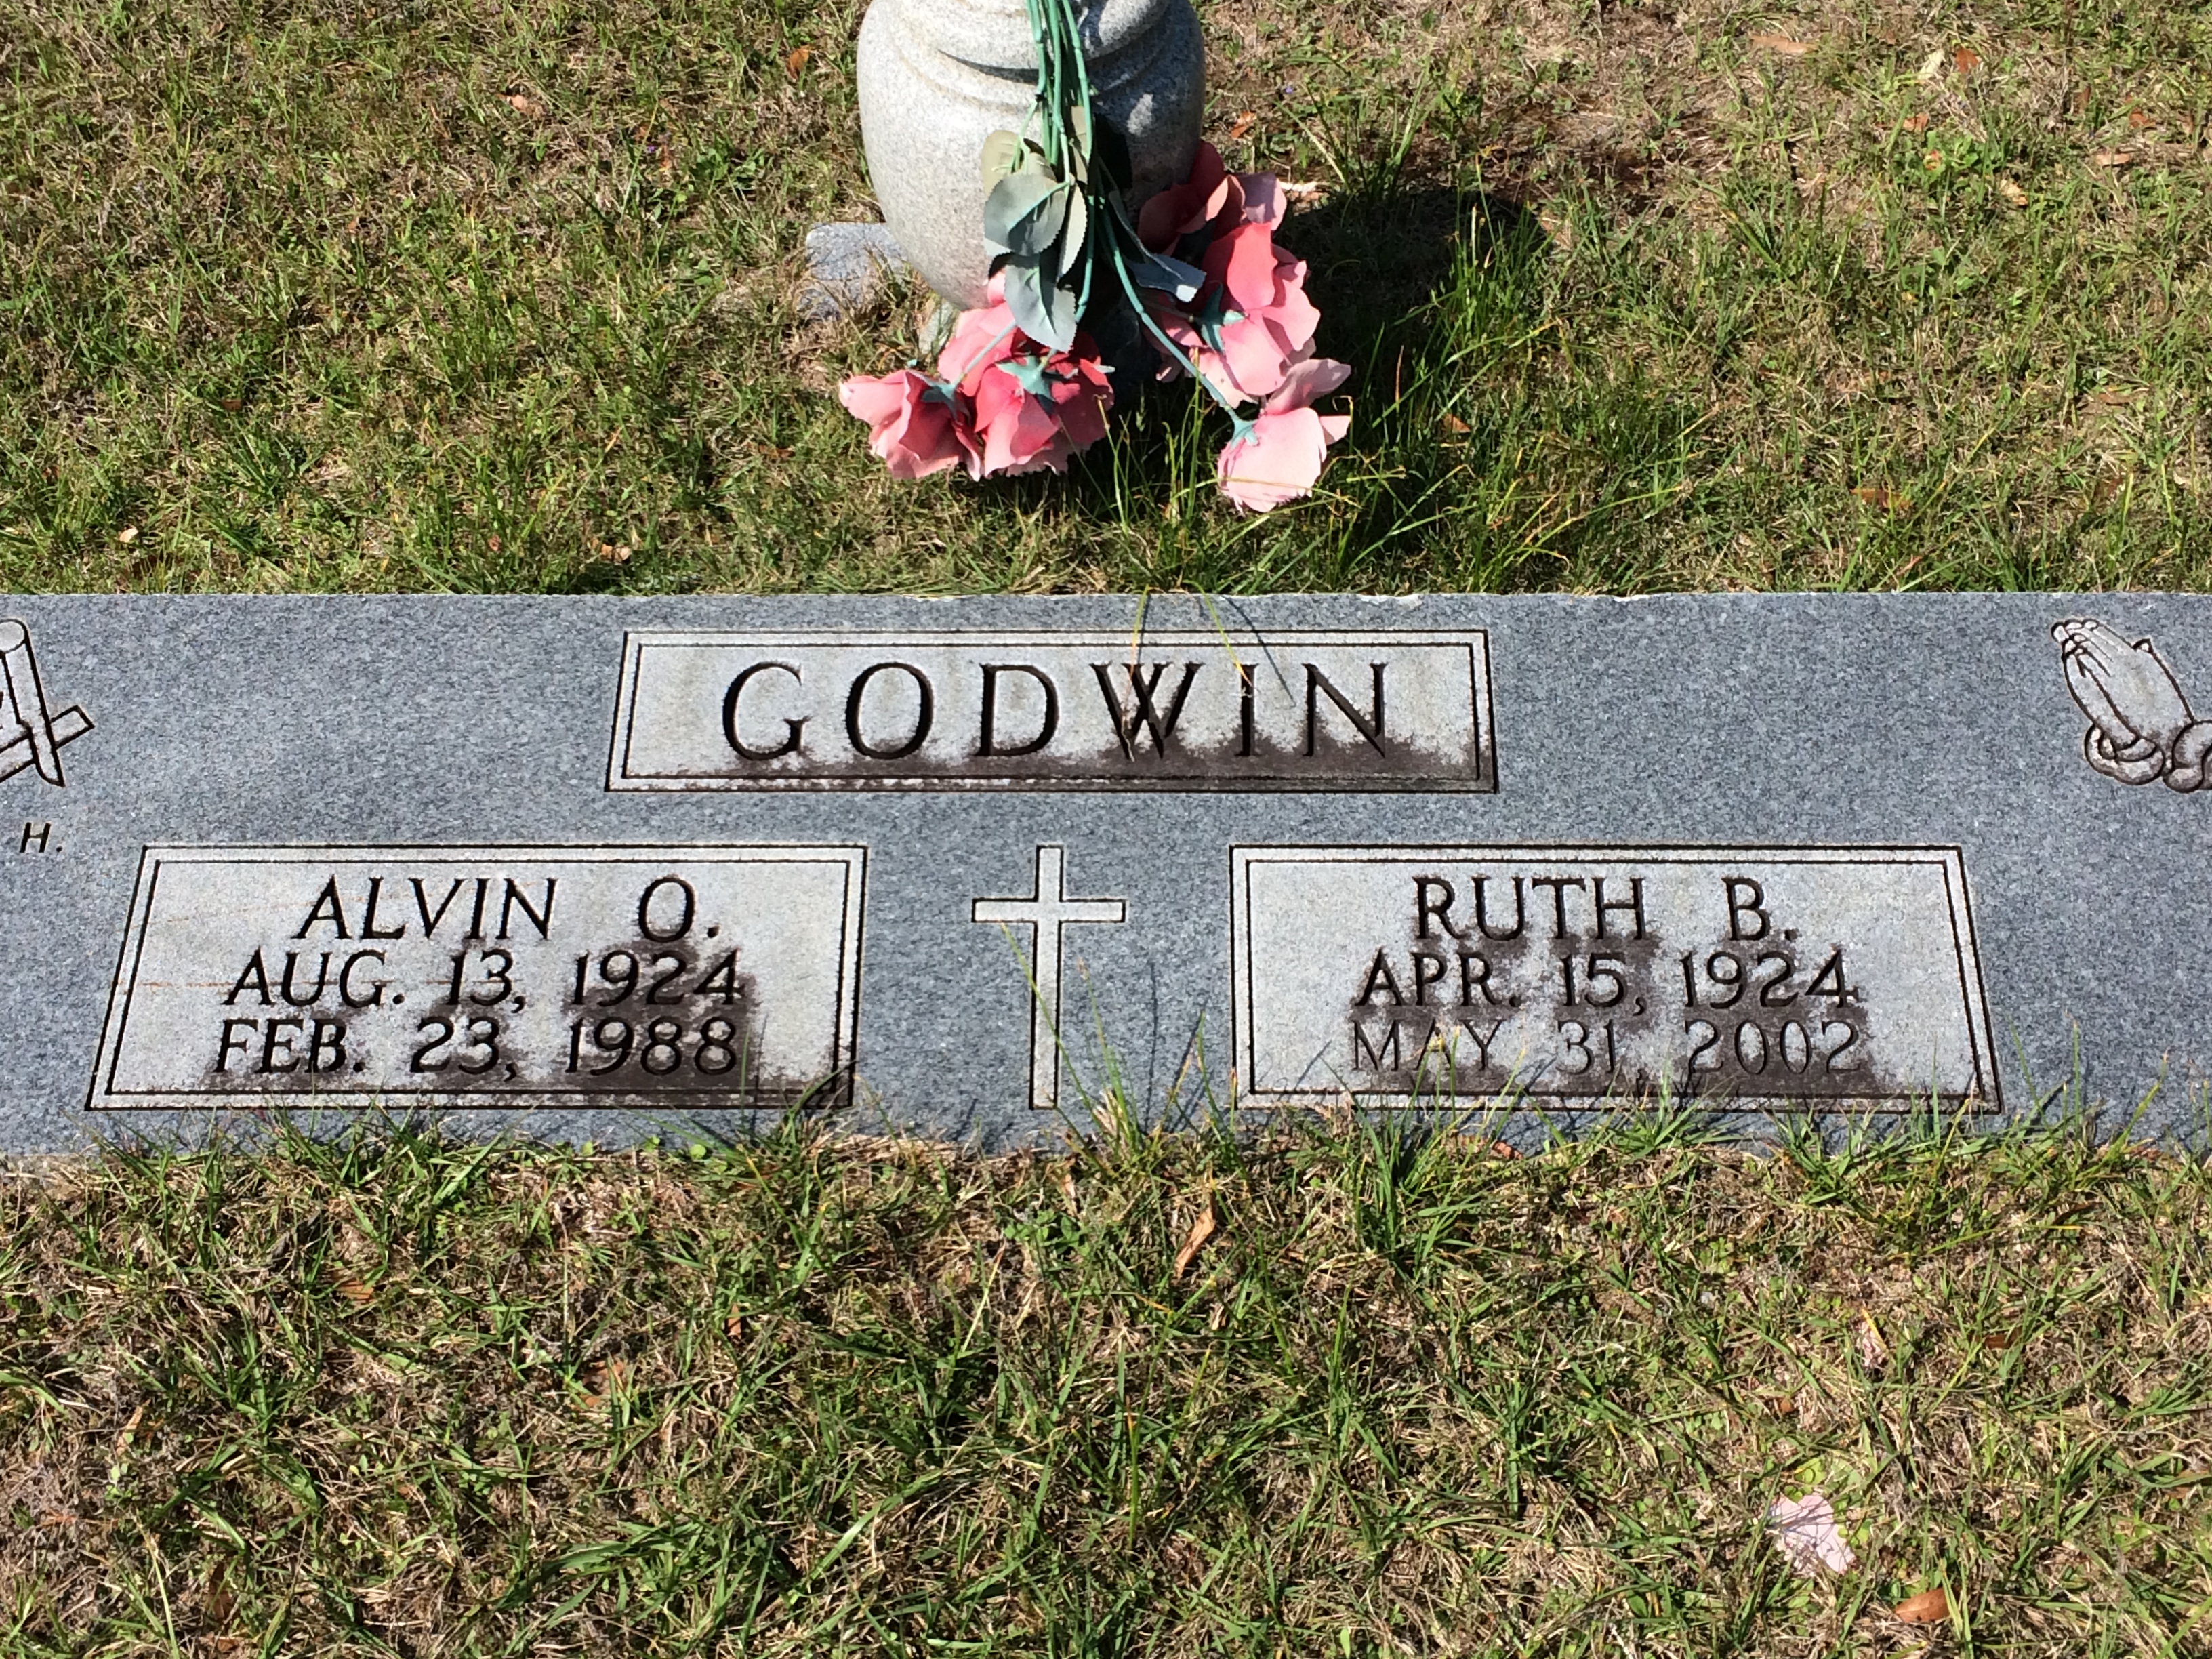 Alvin O. Godwin